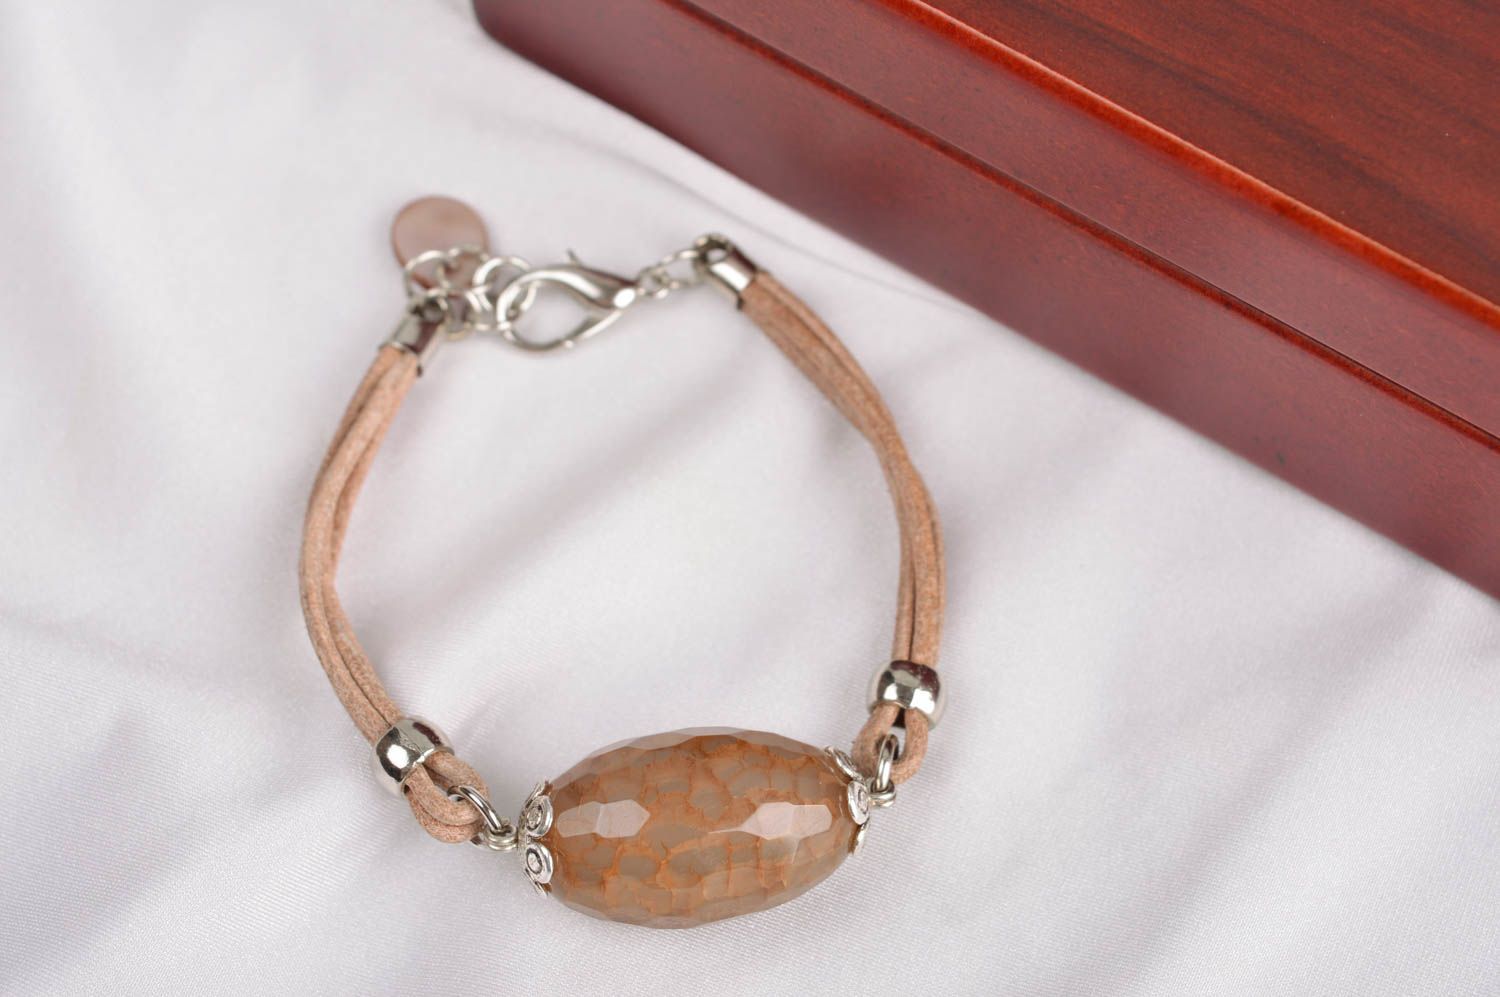 Handmade gemstone bracelet leather bracelet designs accessories for girls photo 1